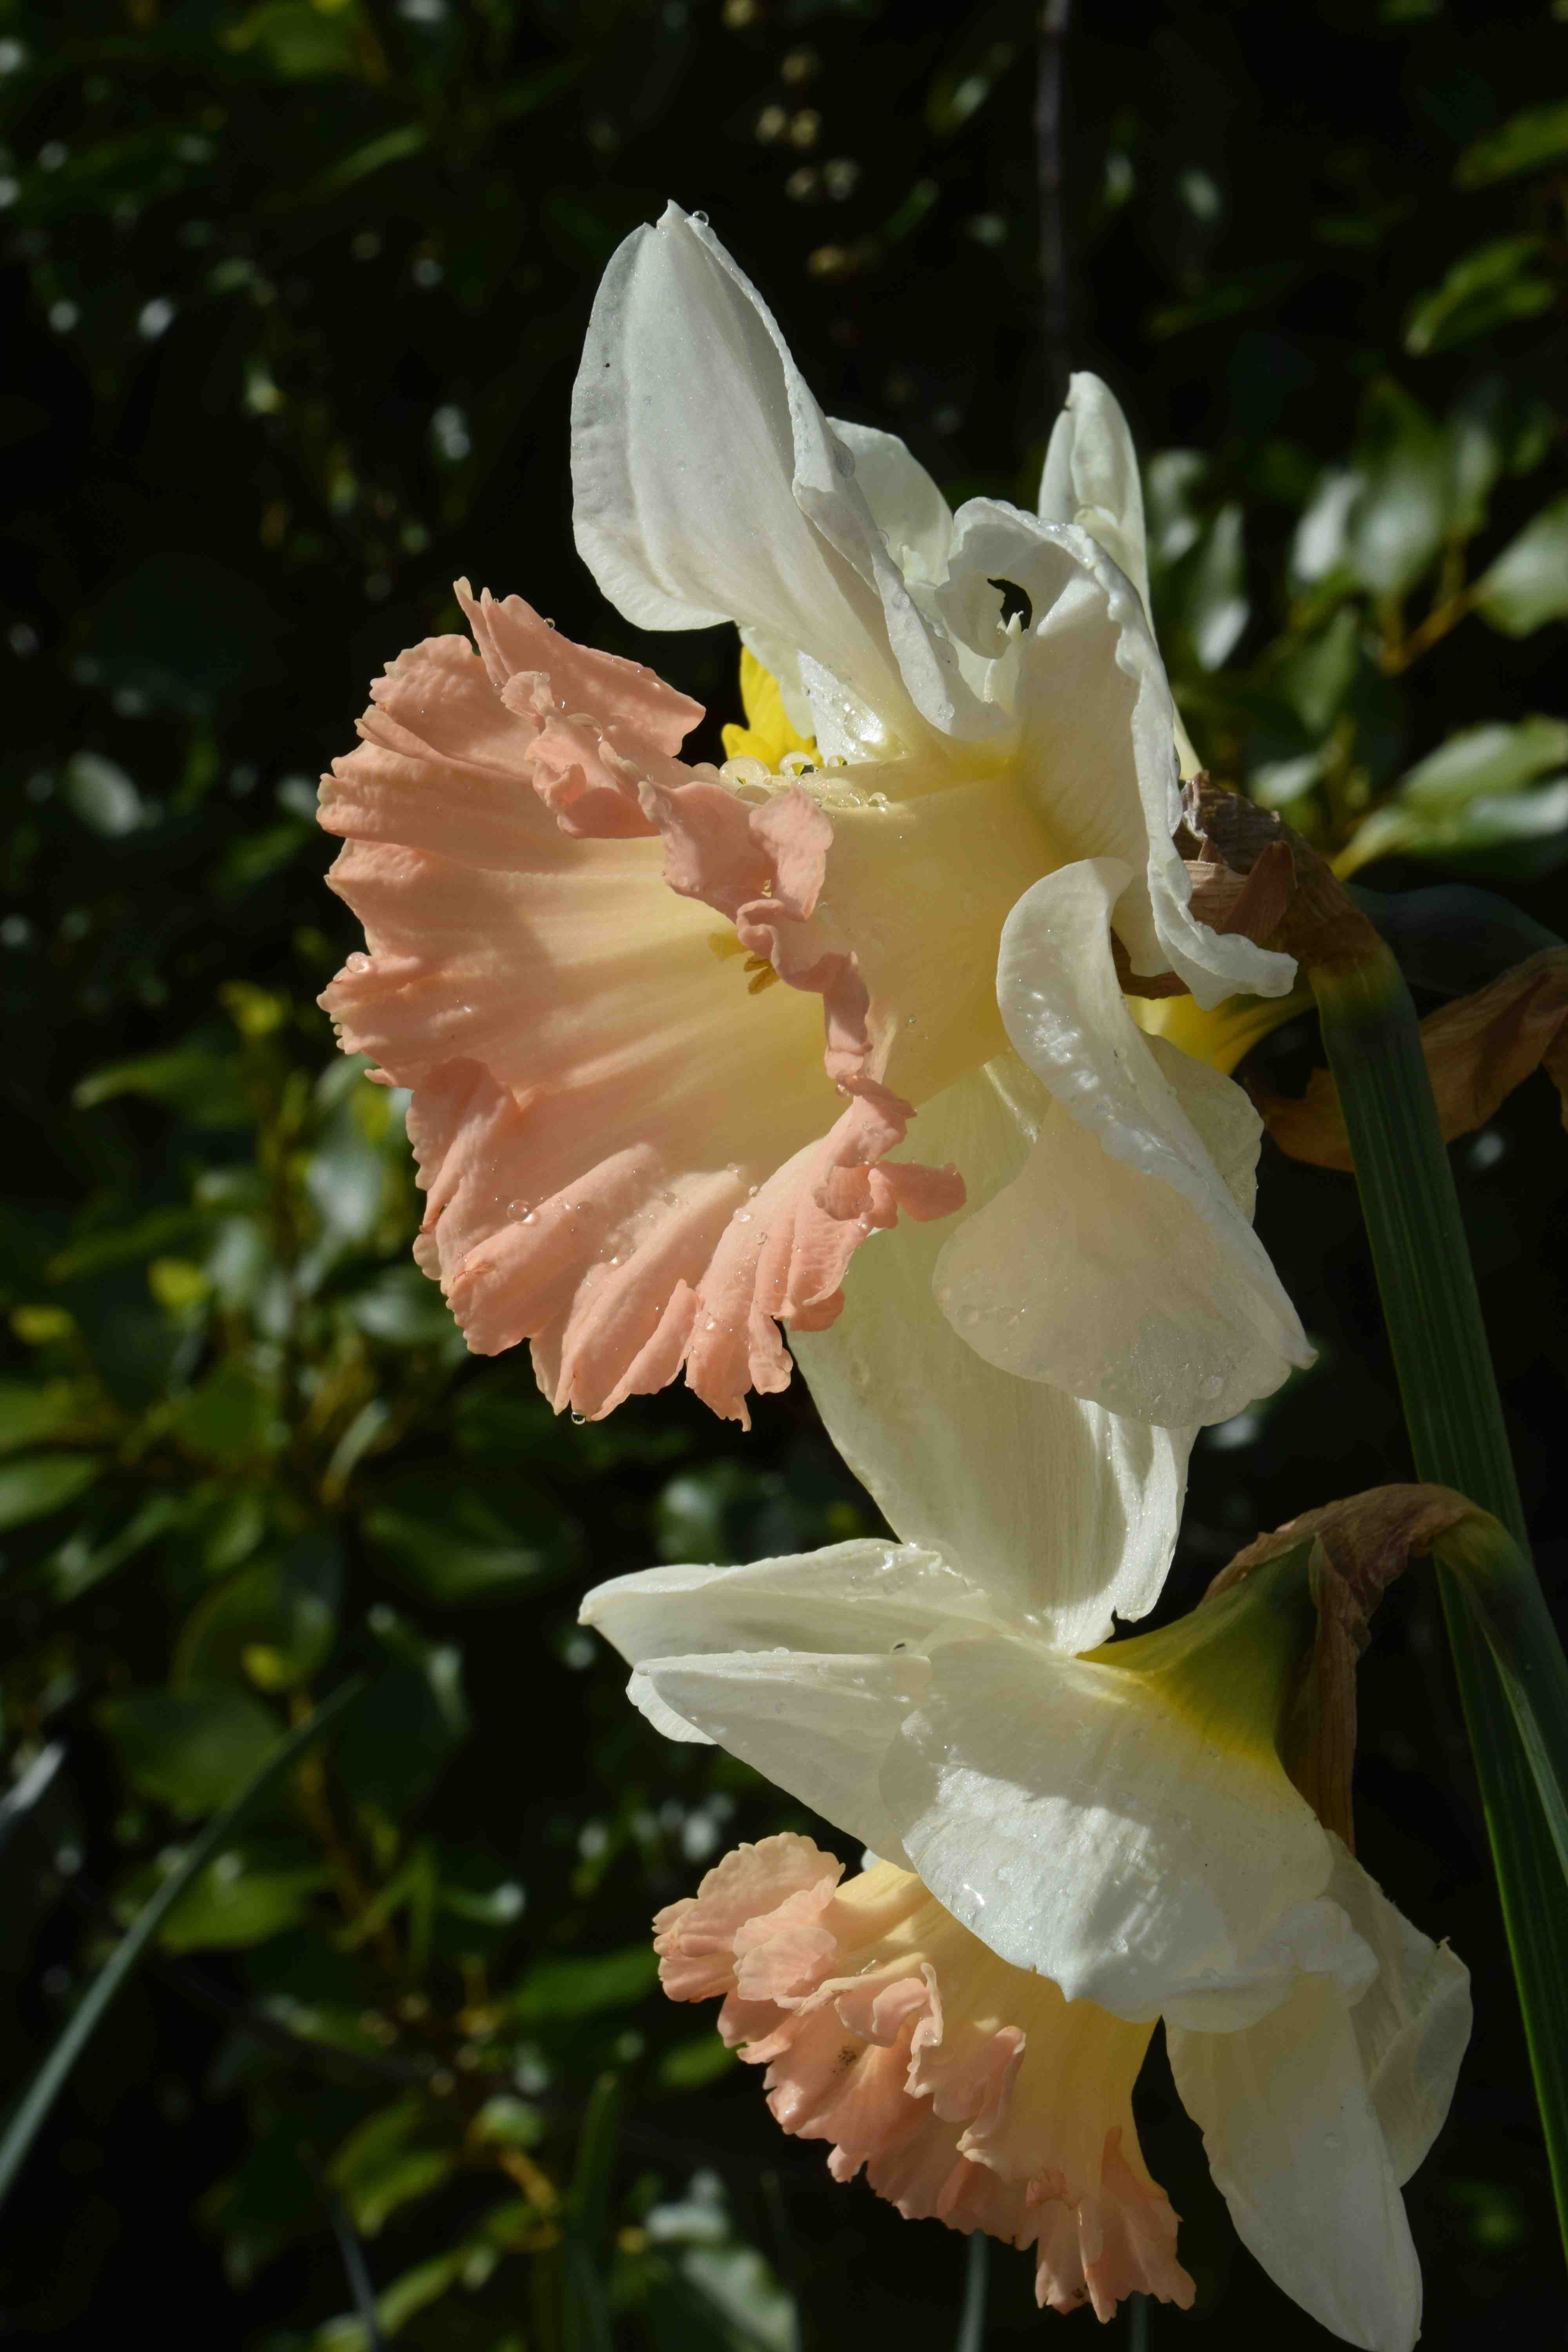 British Gamble Giant Daffodil